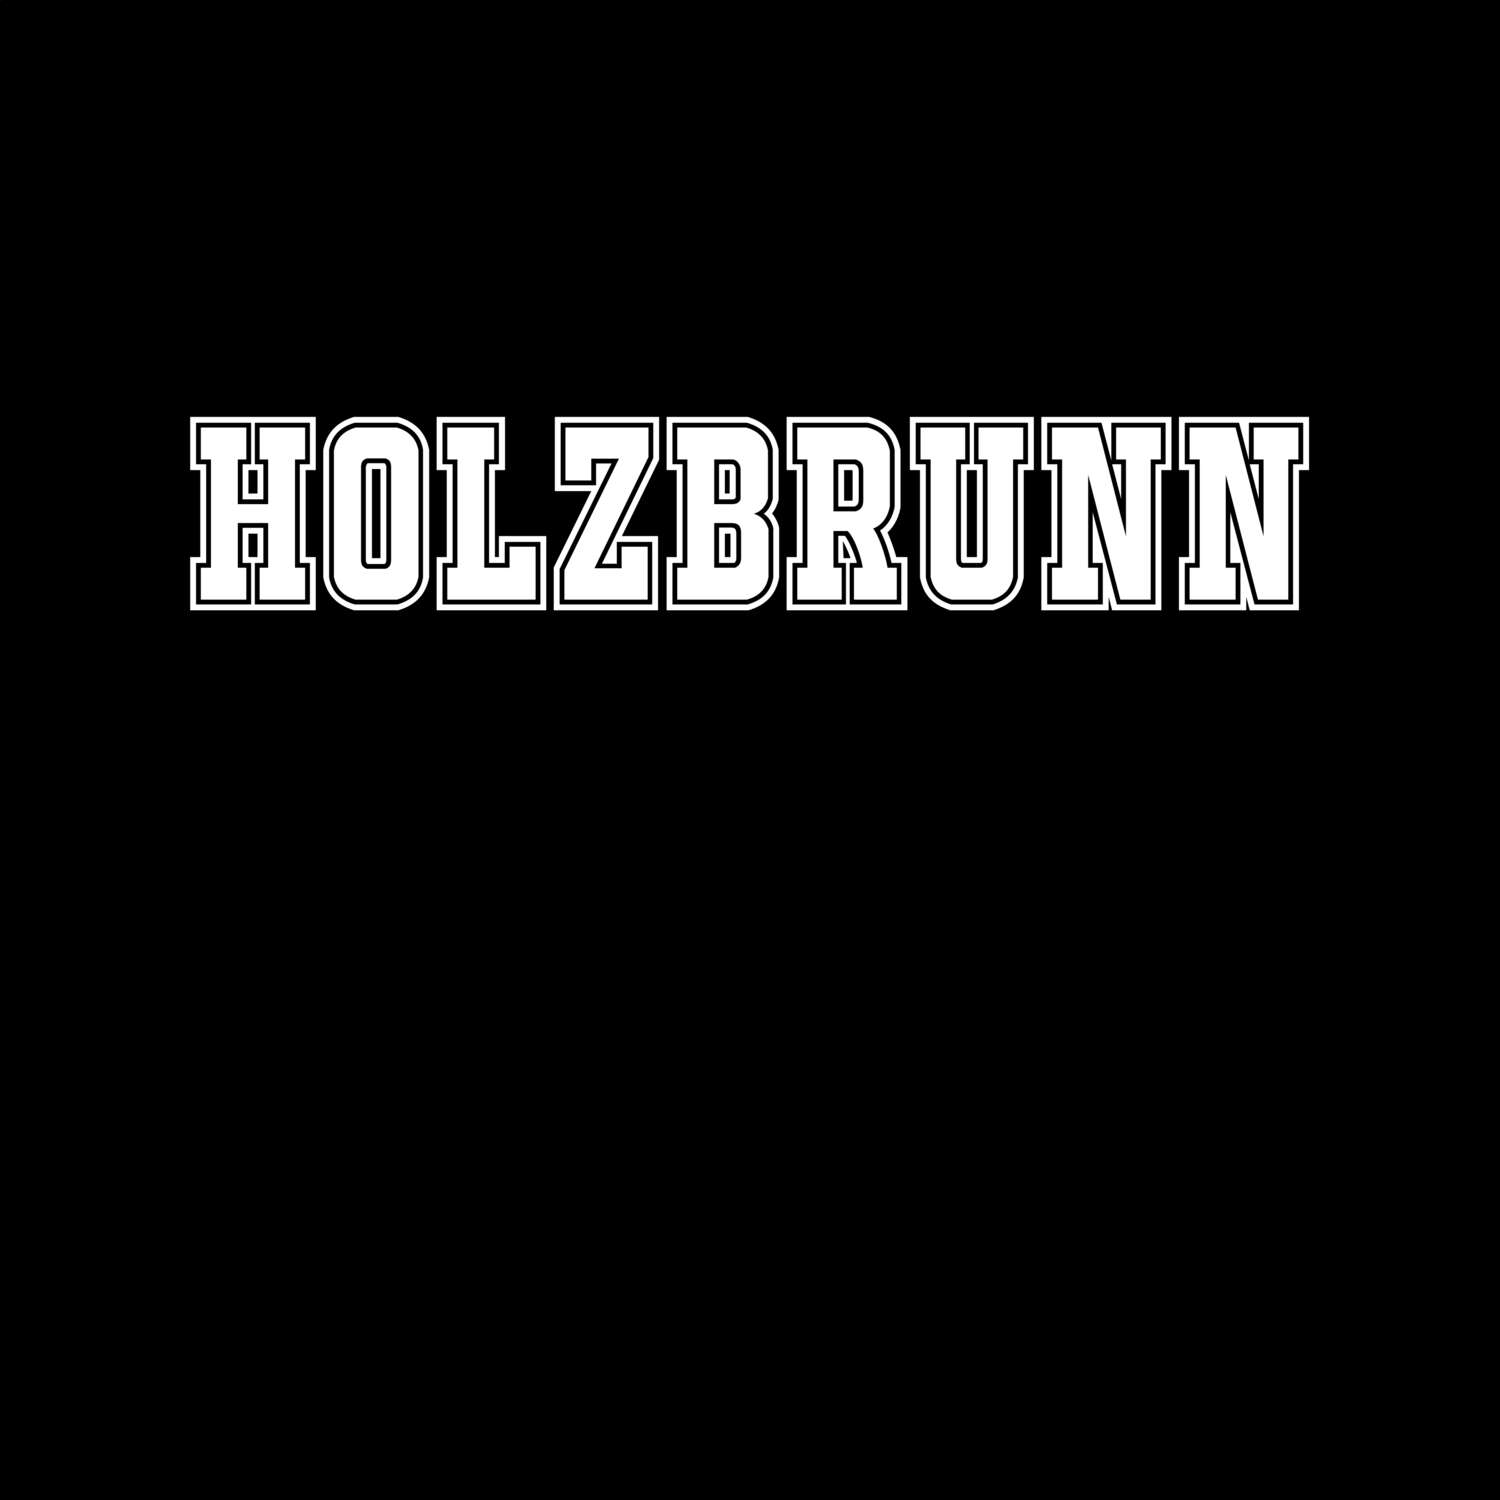 Holzbrunn T-Shirt »Classic«